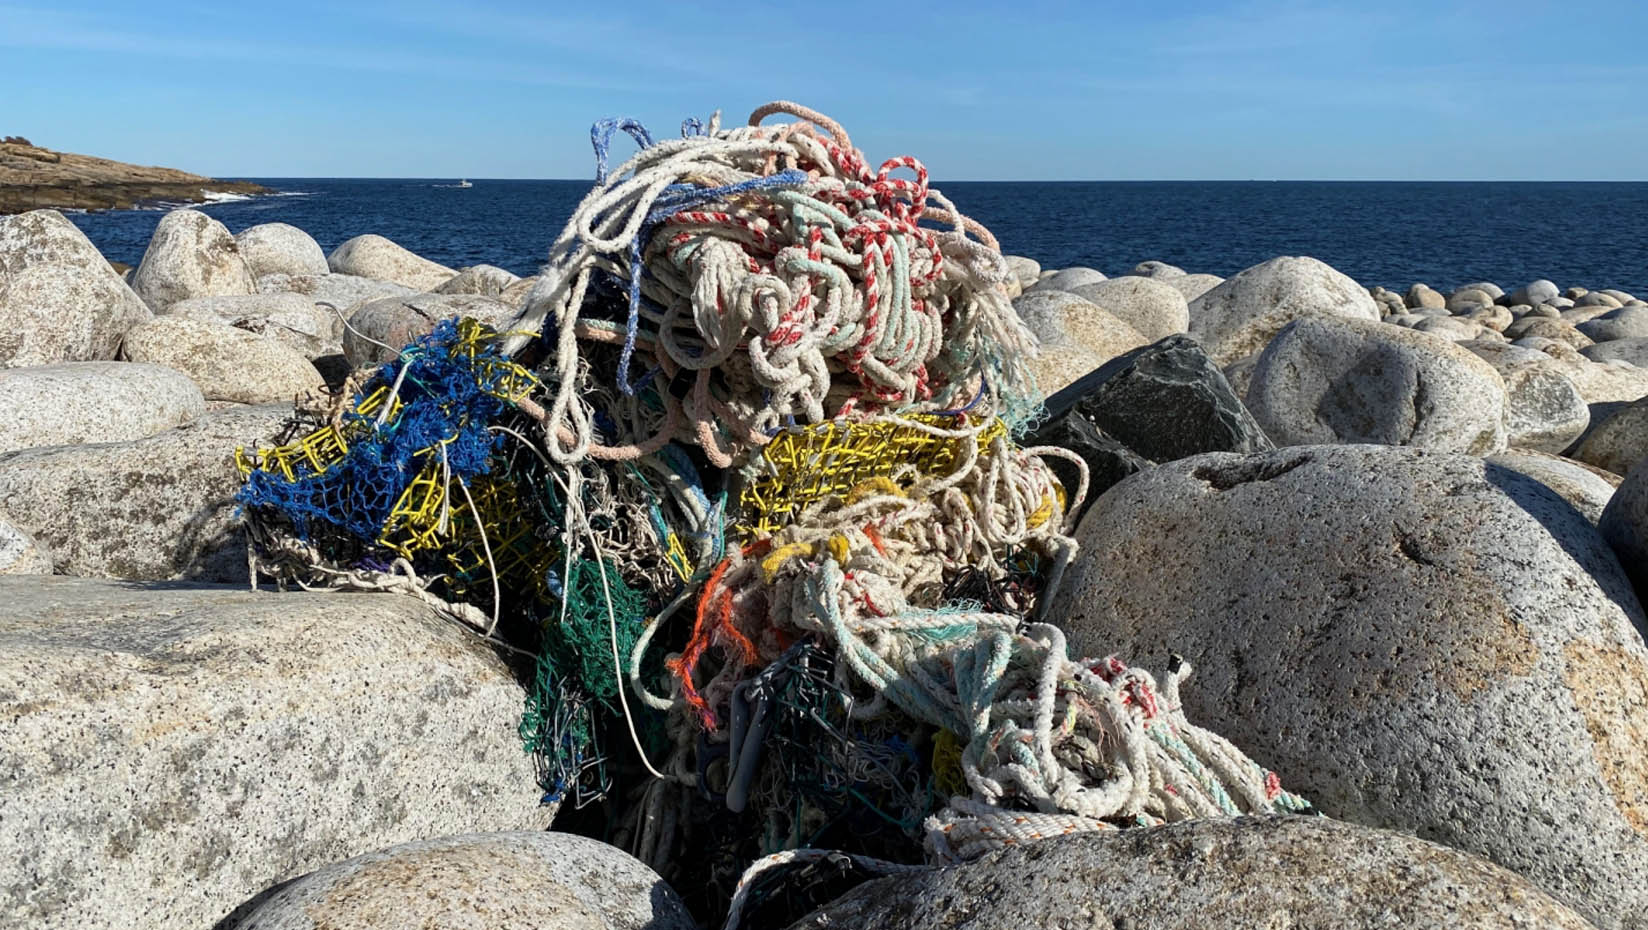 A photo of marine debris on a beach in Maine